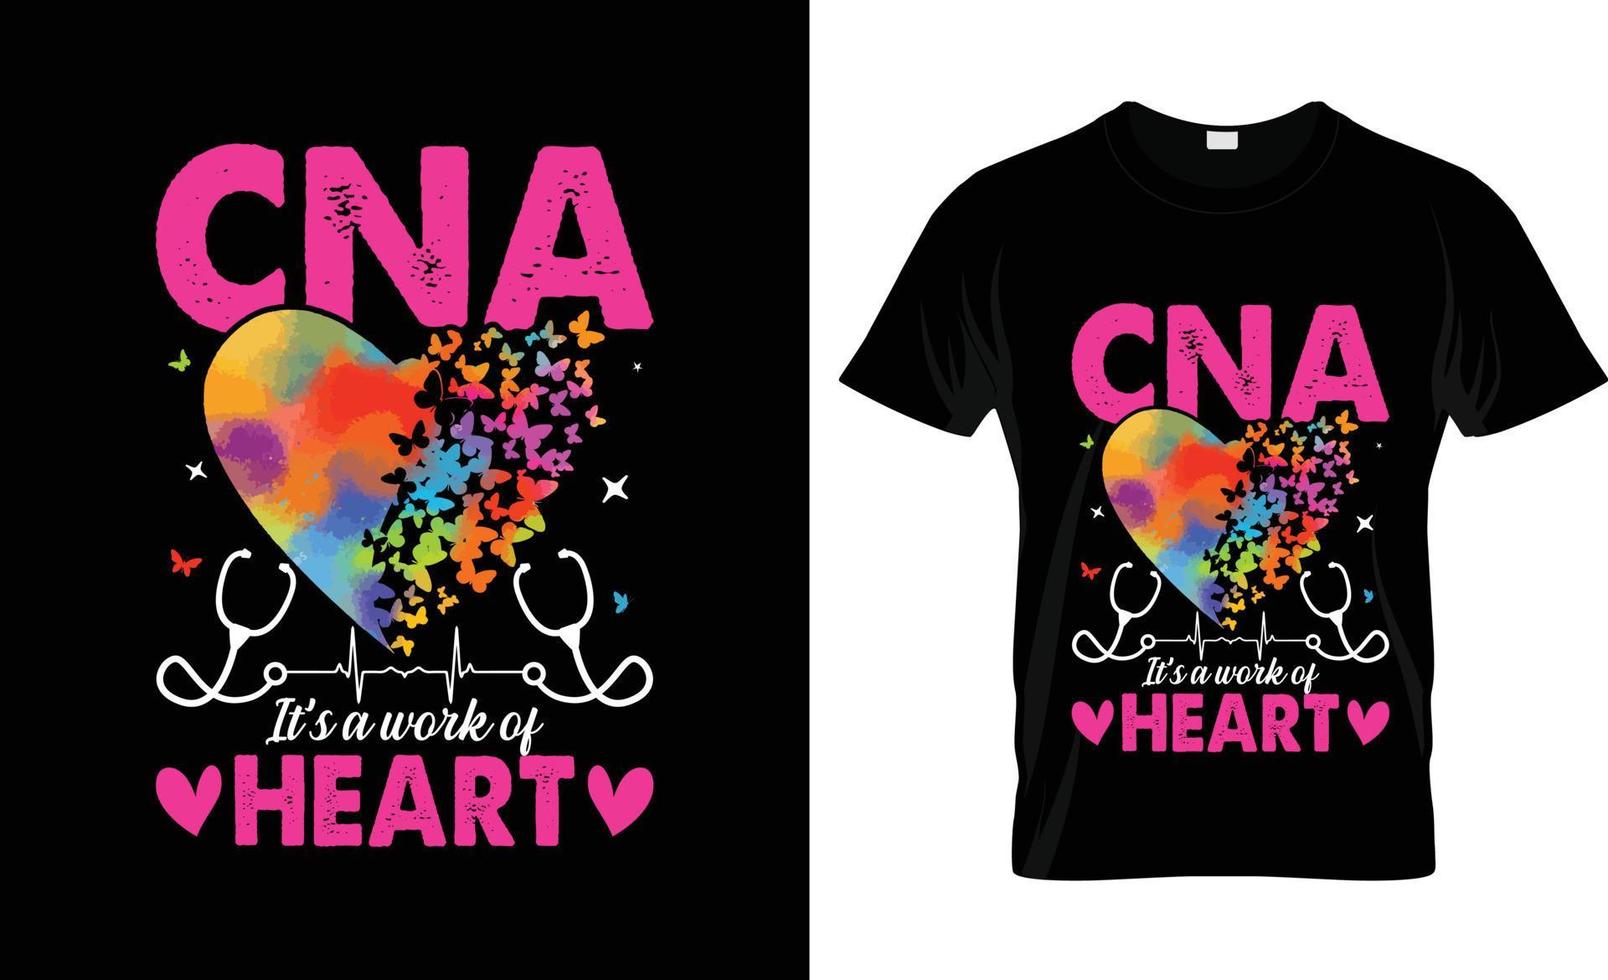 conception de t-shirt cna, slogan de t-shirt cna et conception de vêtements, typographie cna, vecteur cna, illustration cna